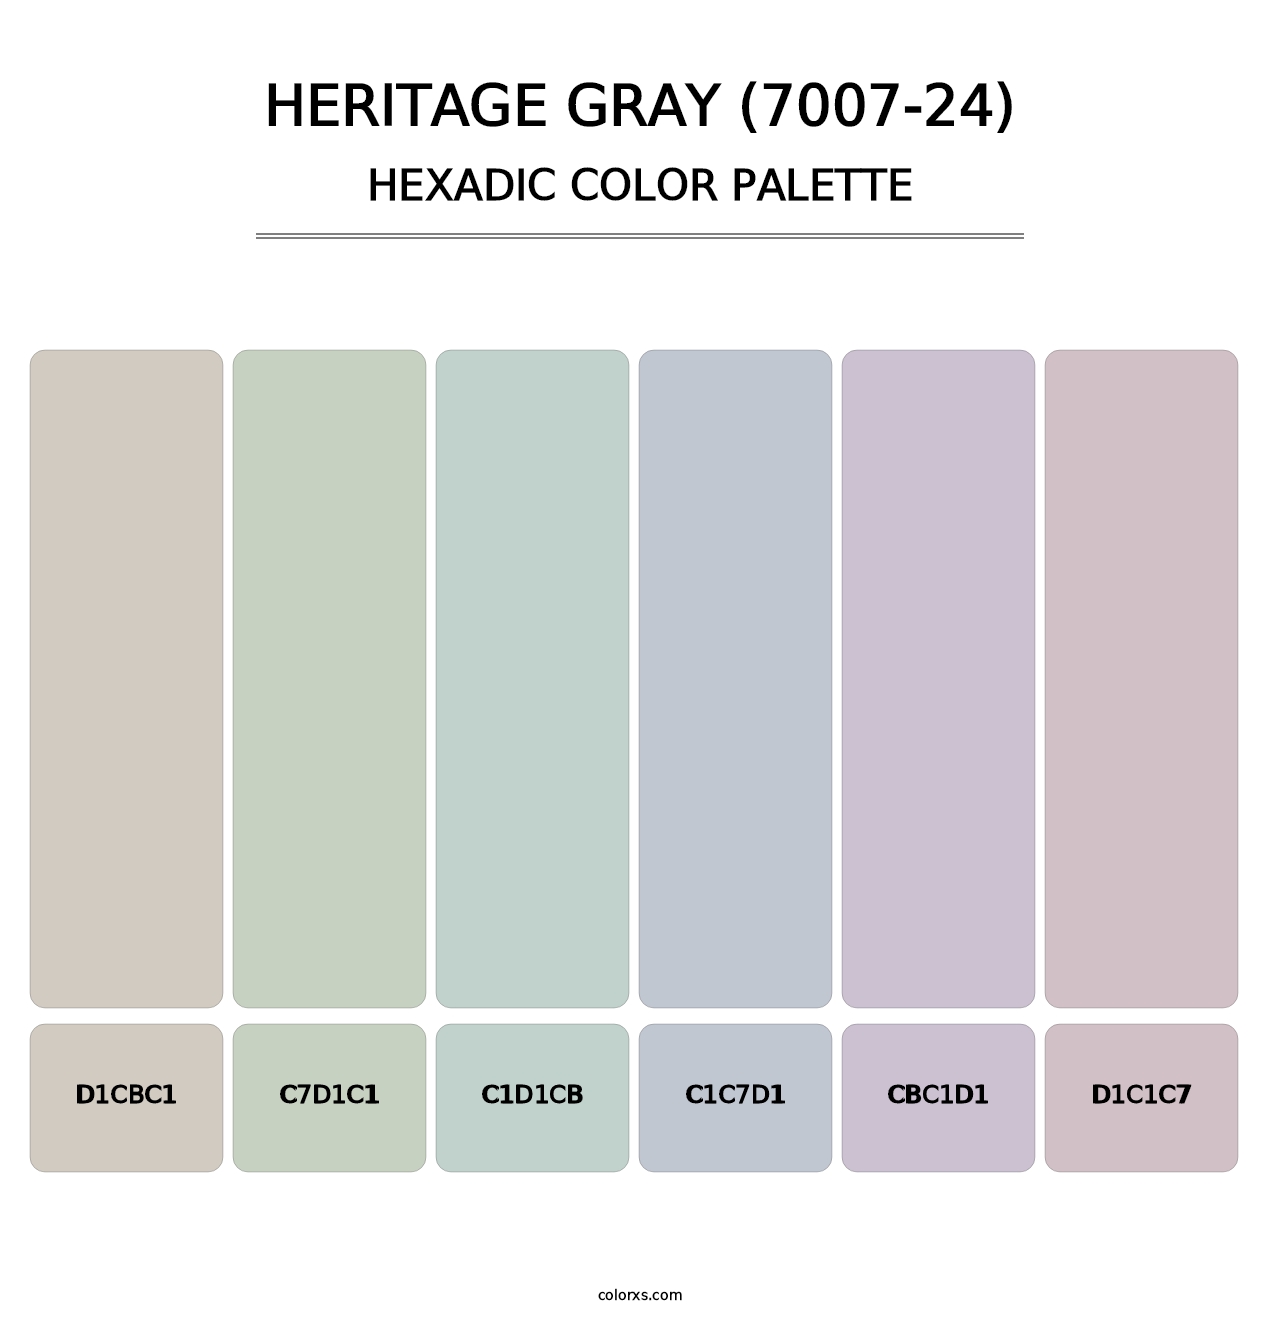 Heritage Gray (7007-24) - Hexadic Color Palette